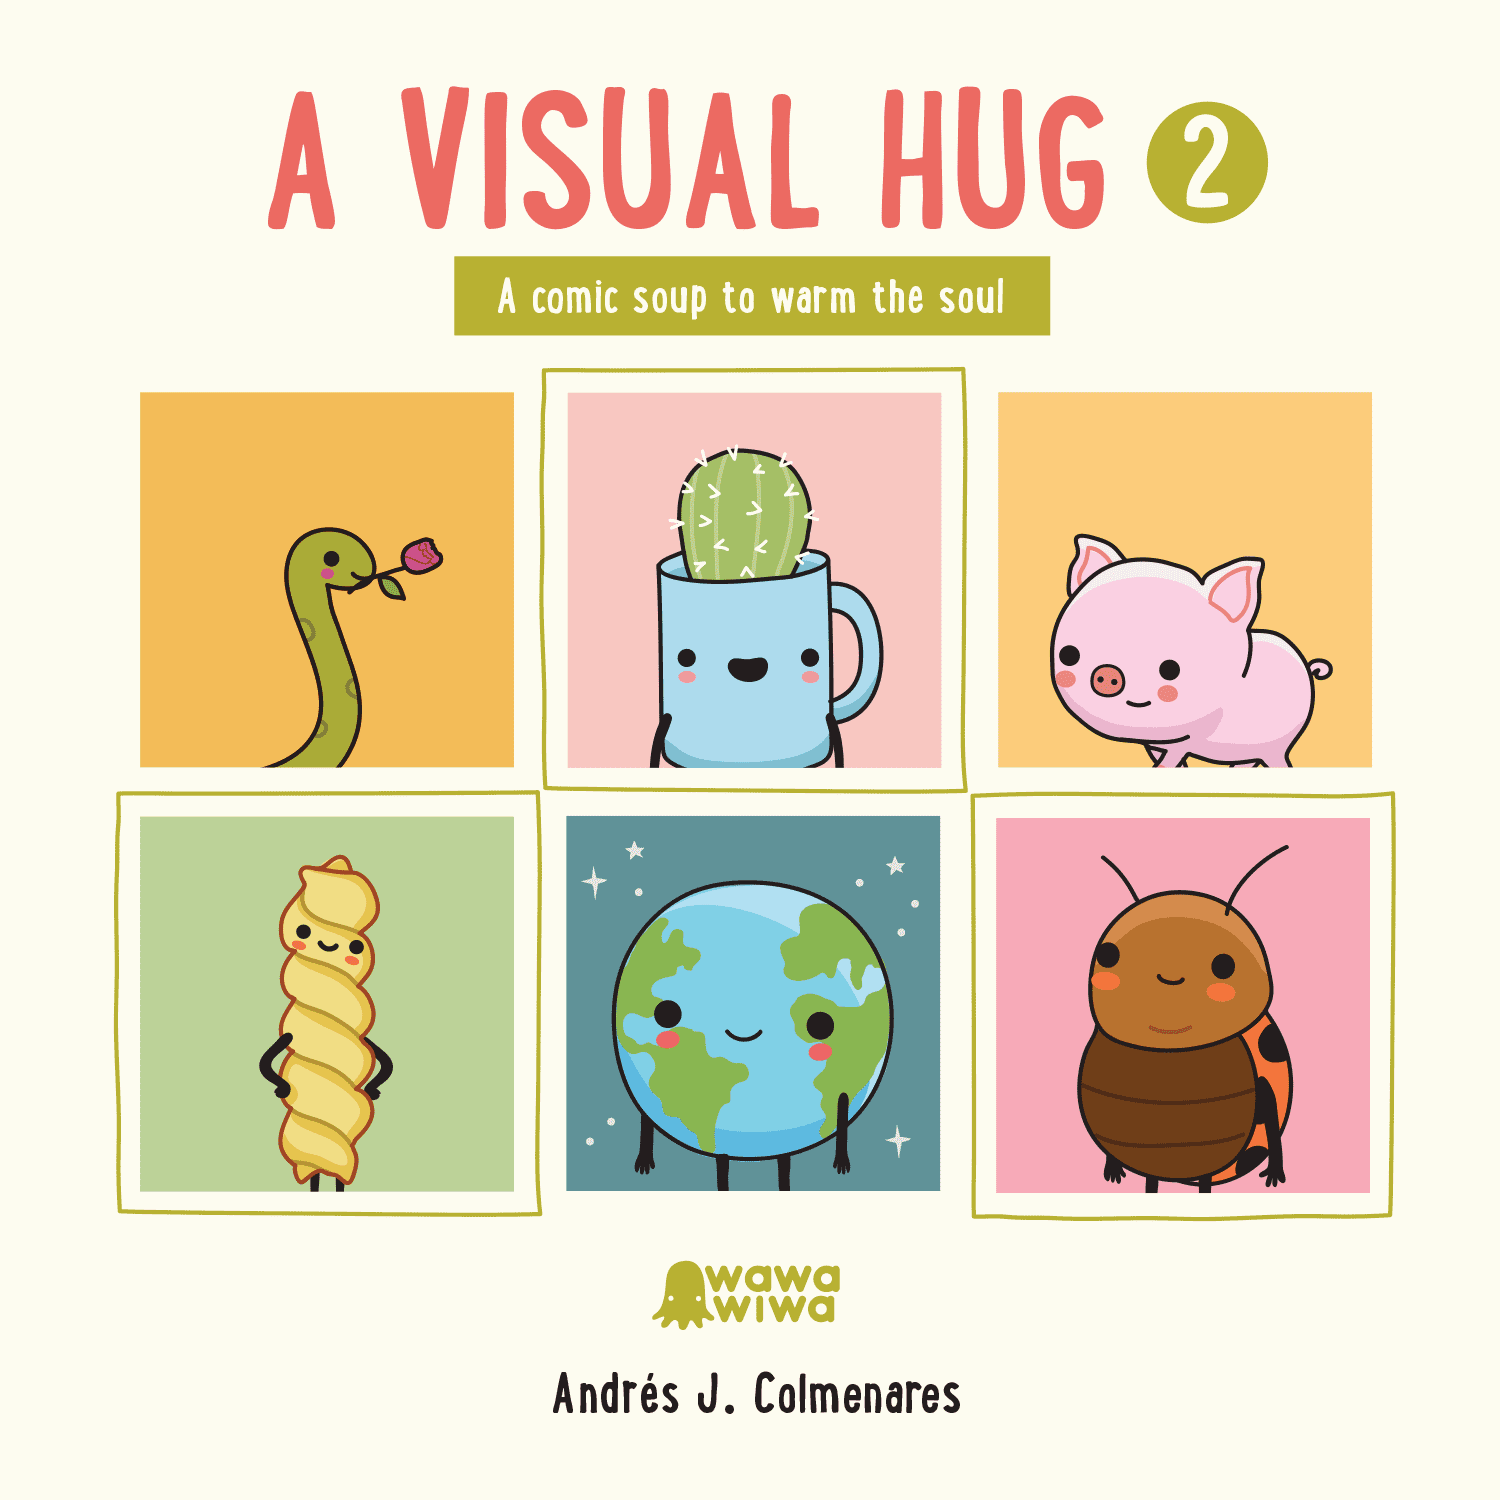 A Visual Hug 2